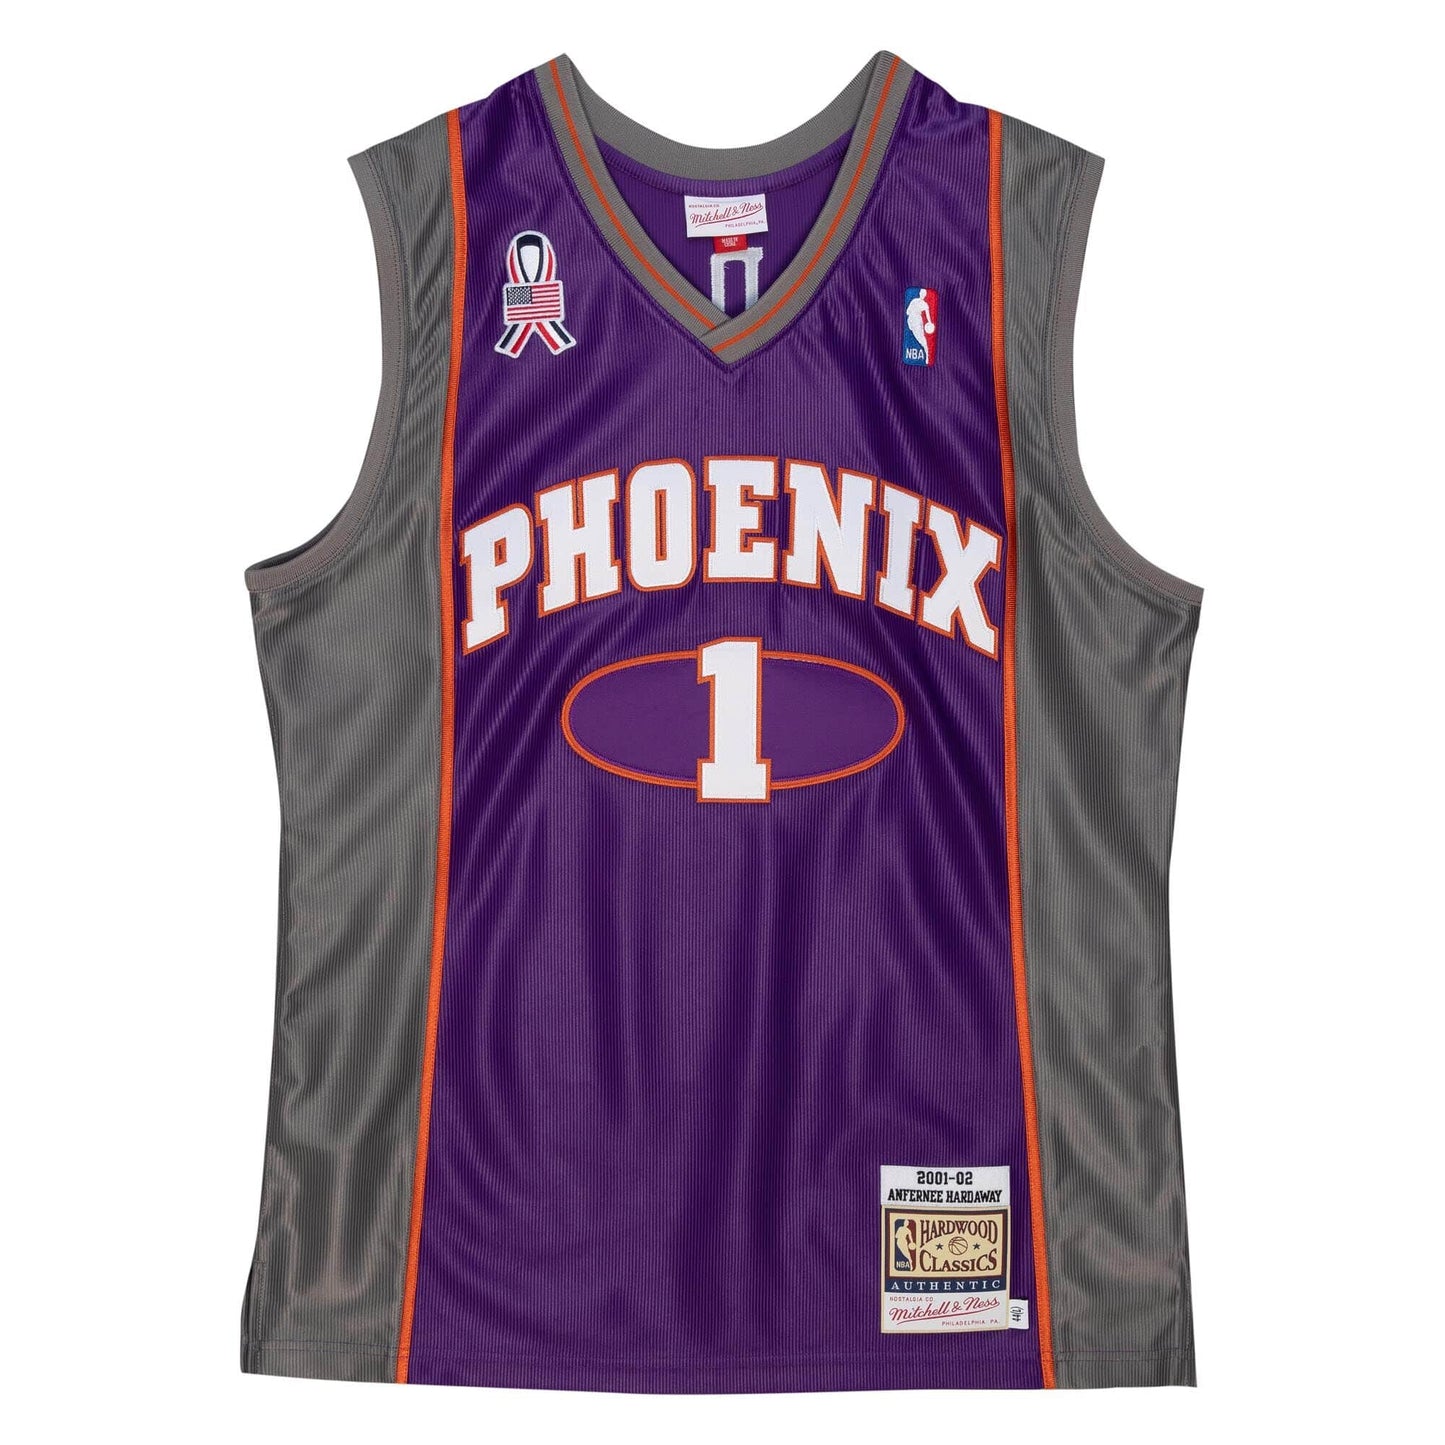 Authentic Penny Hardaway Phoenix Suns 2001-02 Jersey